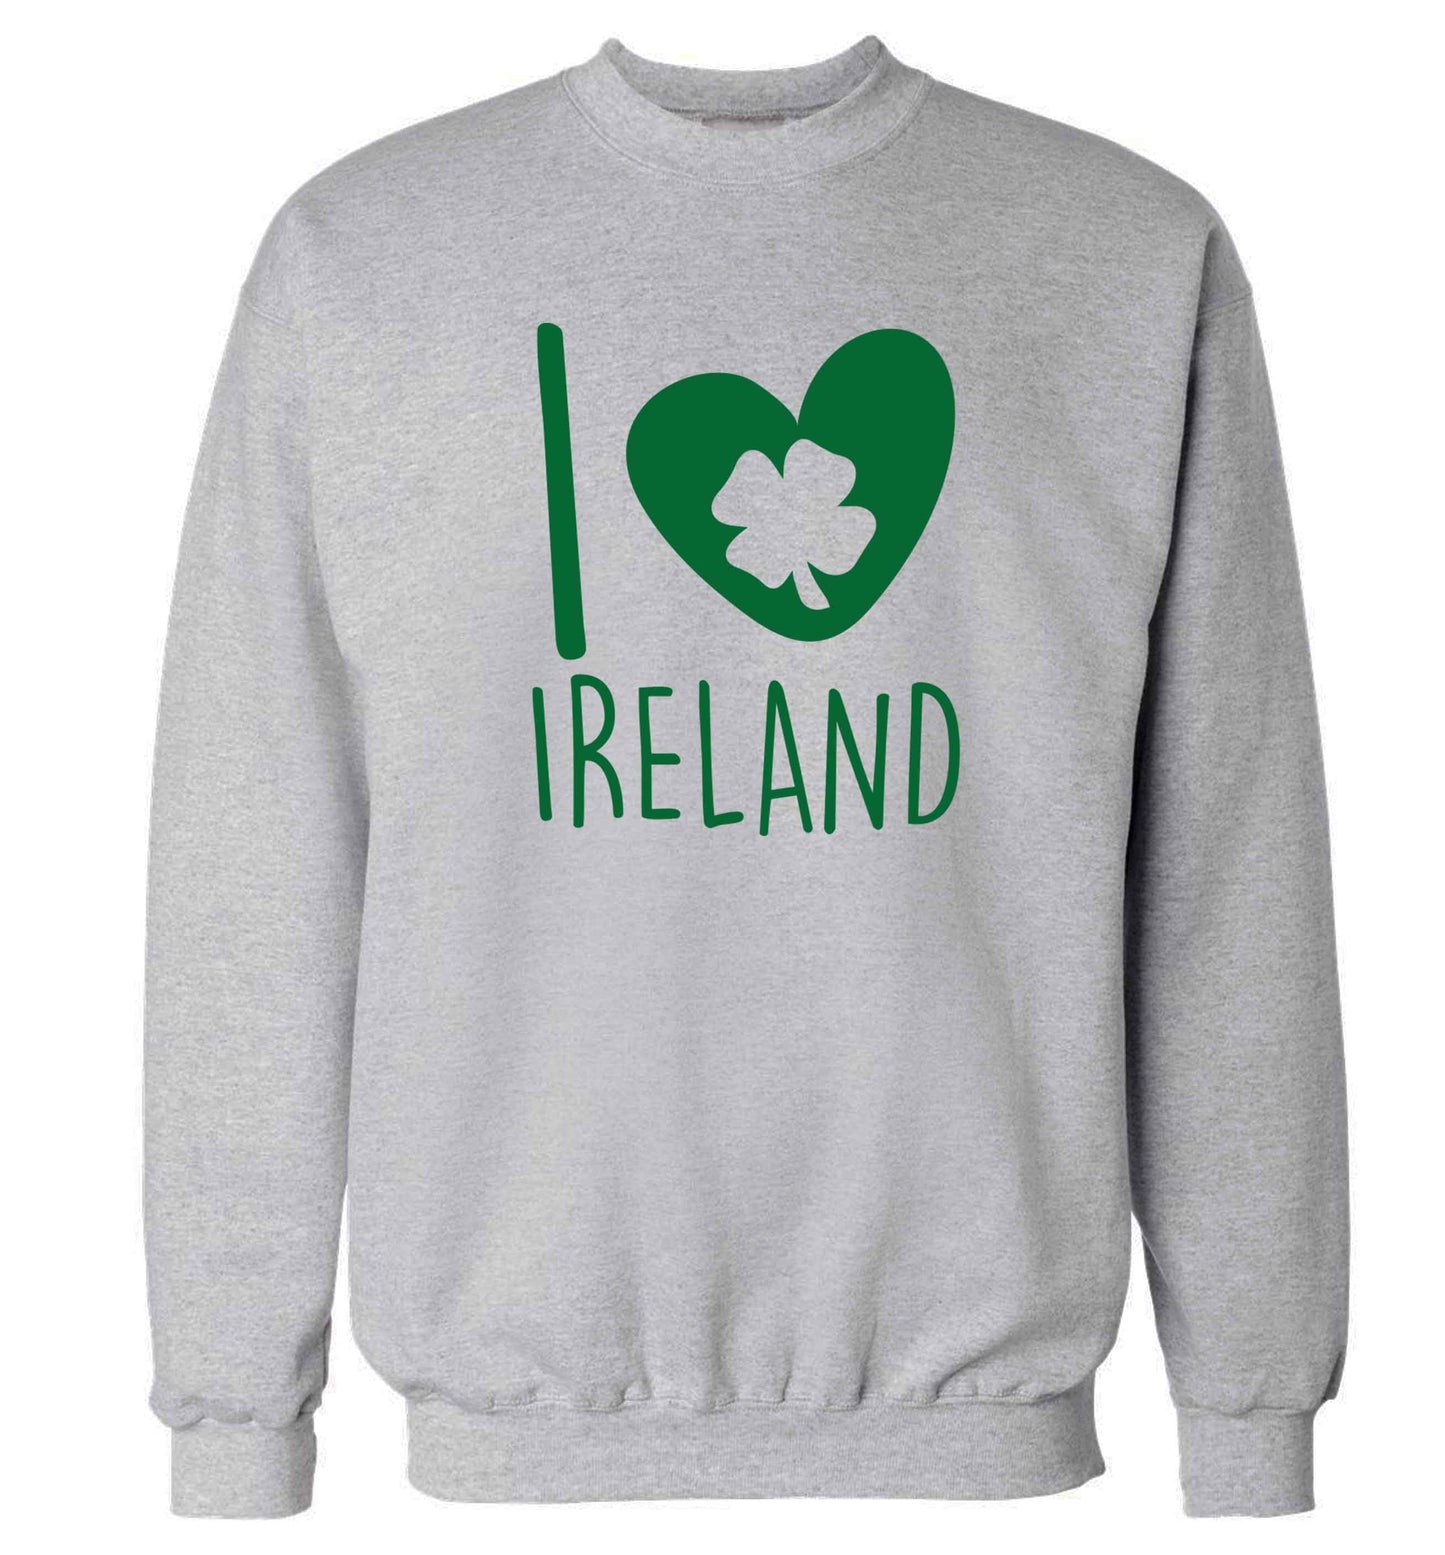 I love Ireland adult's unisex grey sweater 2XL